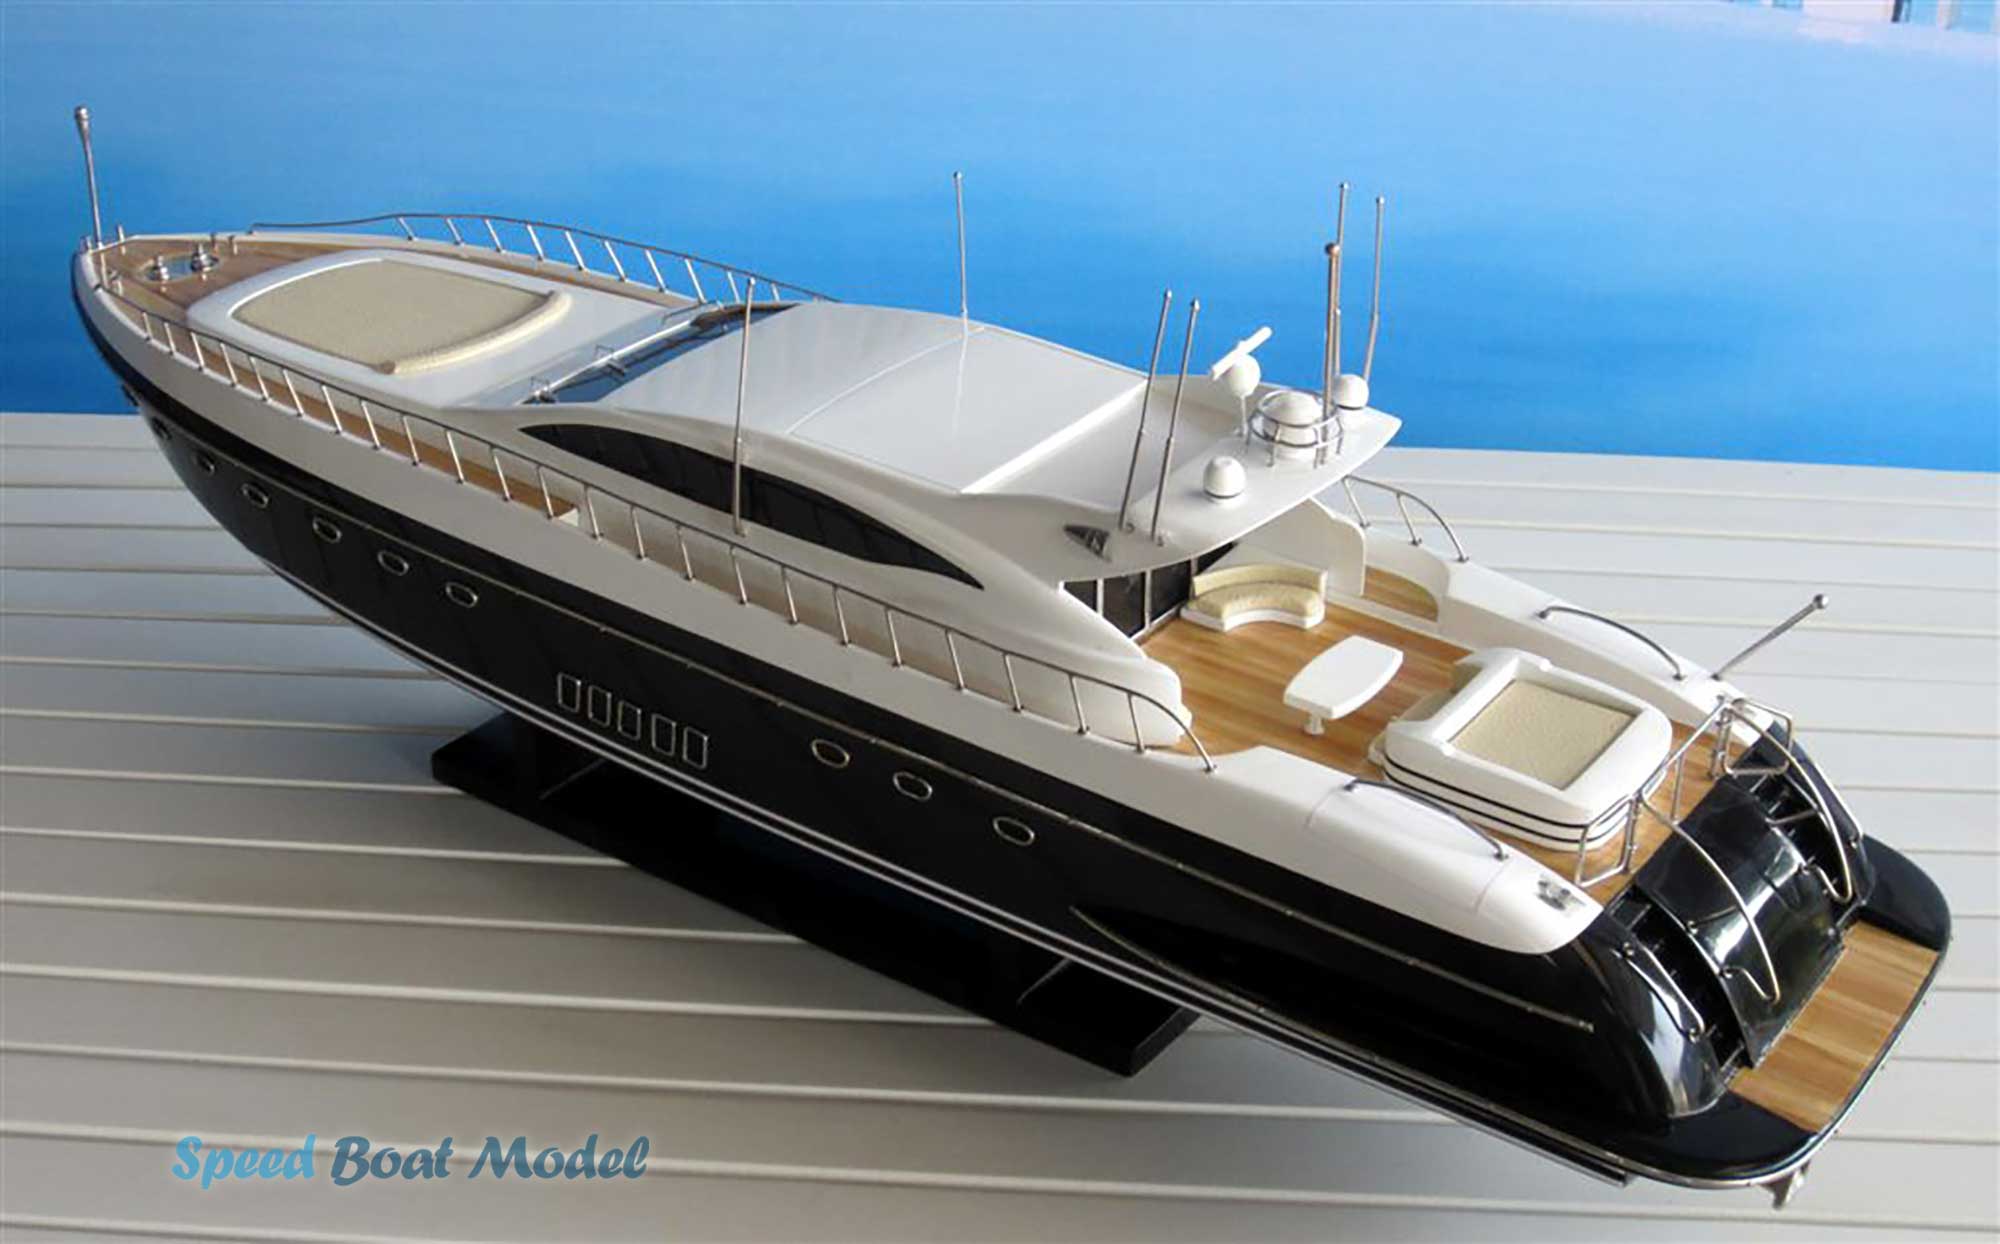 Mangusta 108 (Black Hull) Modern Yacht Model 34.2"